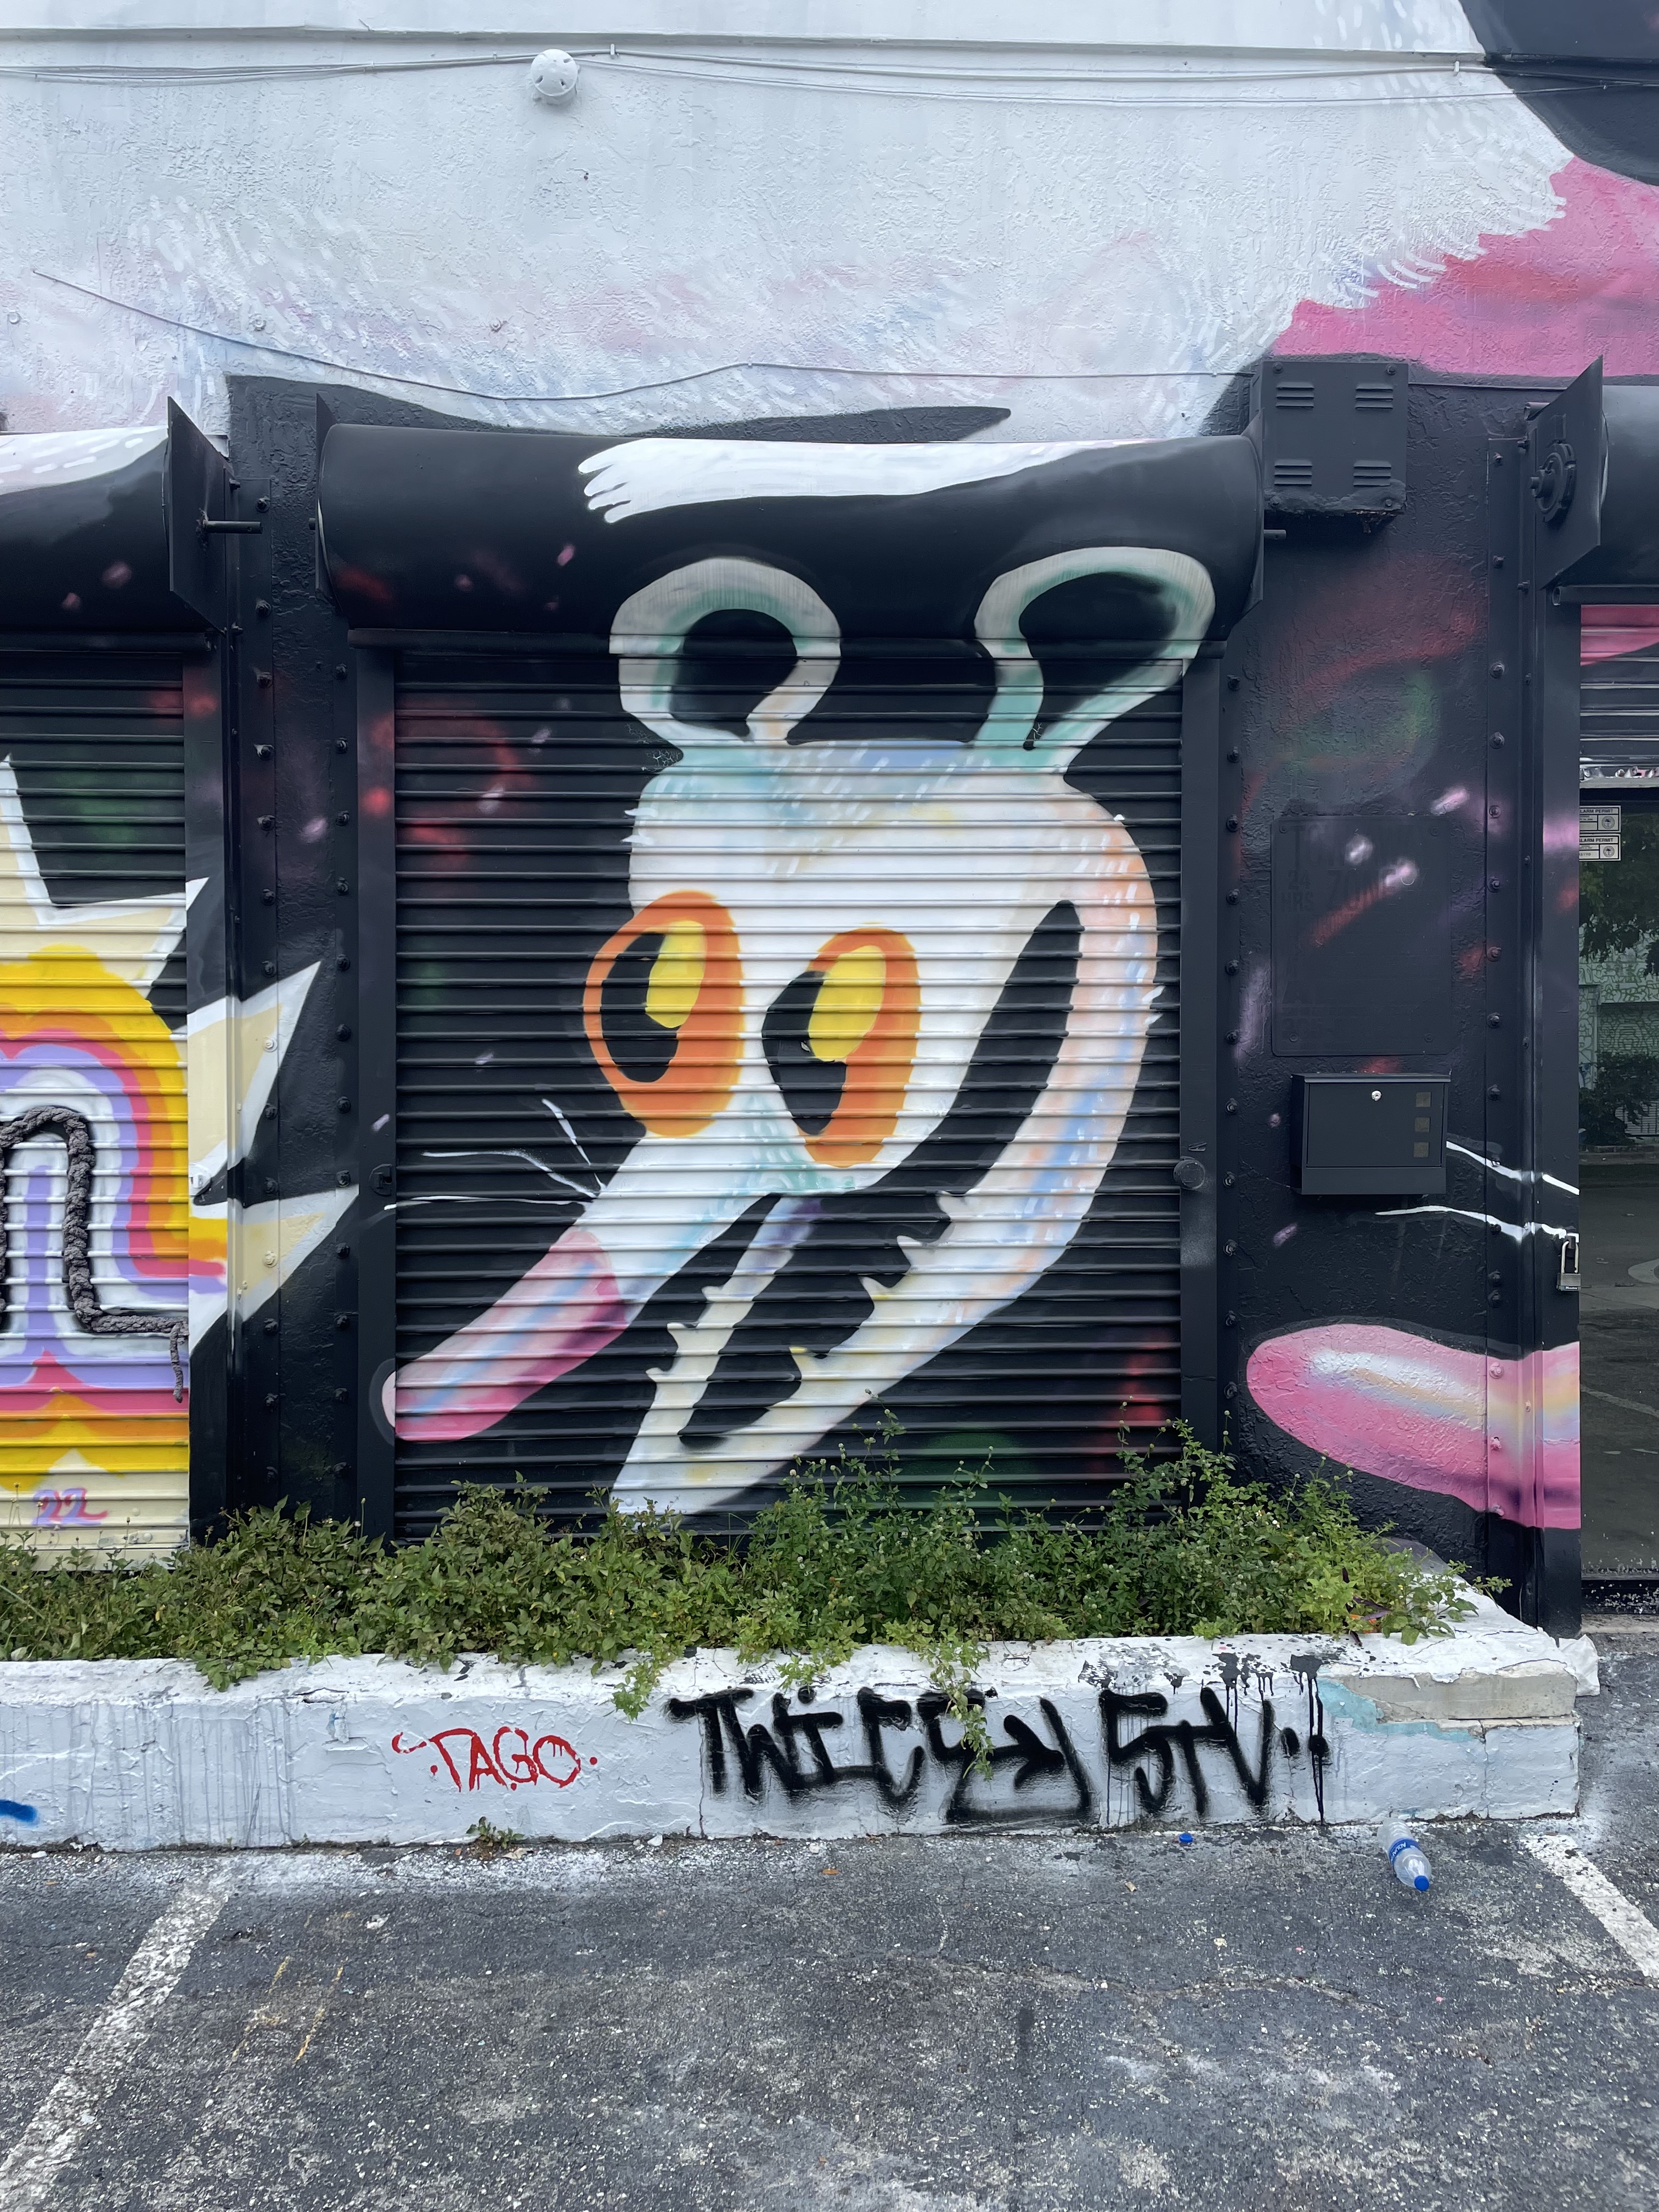 Extremely excited cartoon possum grafitti. Photo by me, grafitti by unknown artist, Wynwood, Miami, FL